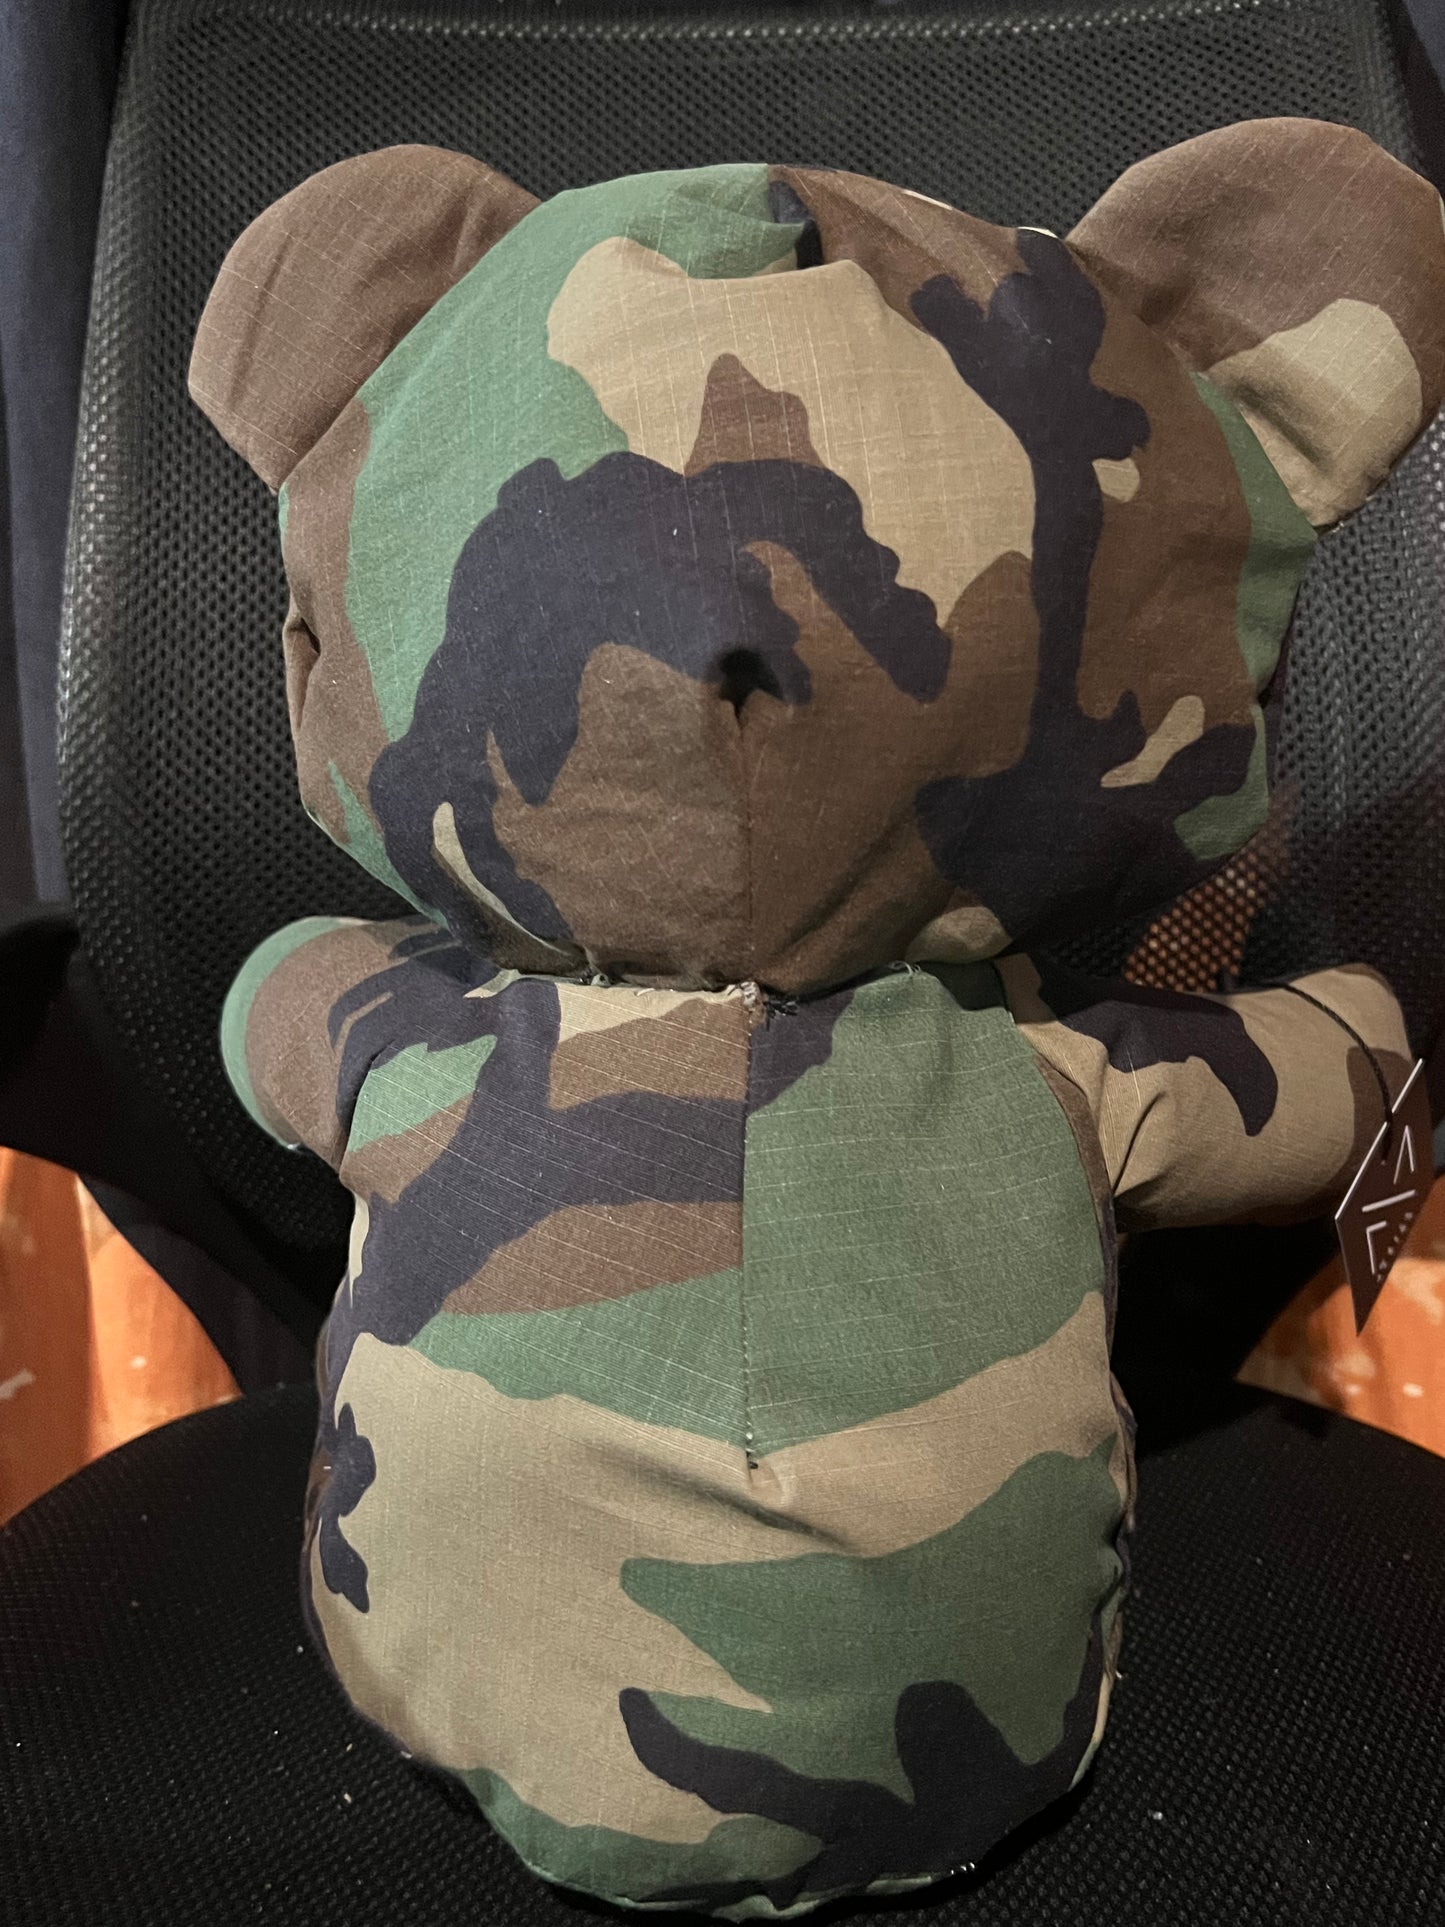 Army BDU Upcycled Teddy Bear